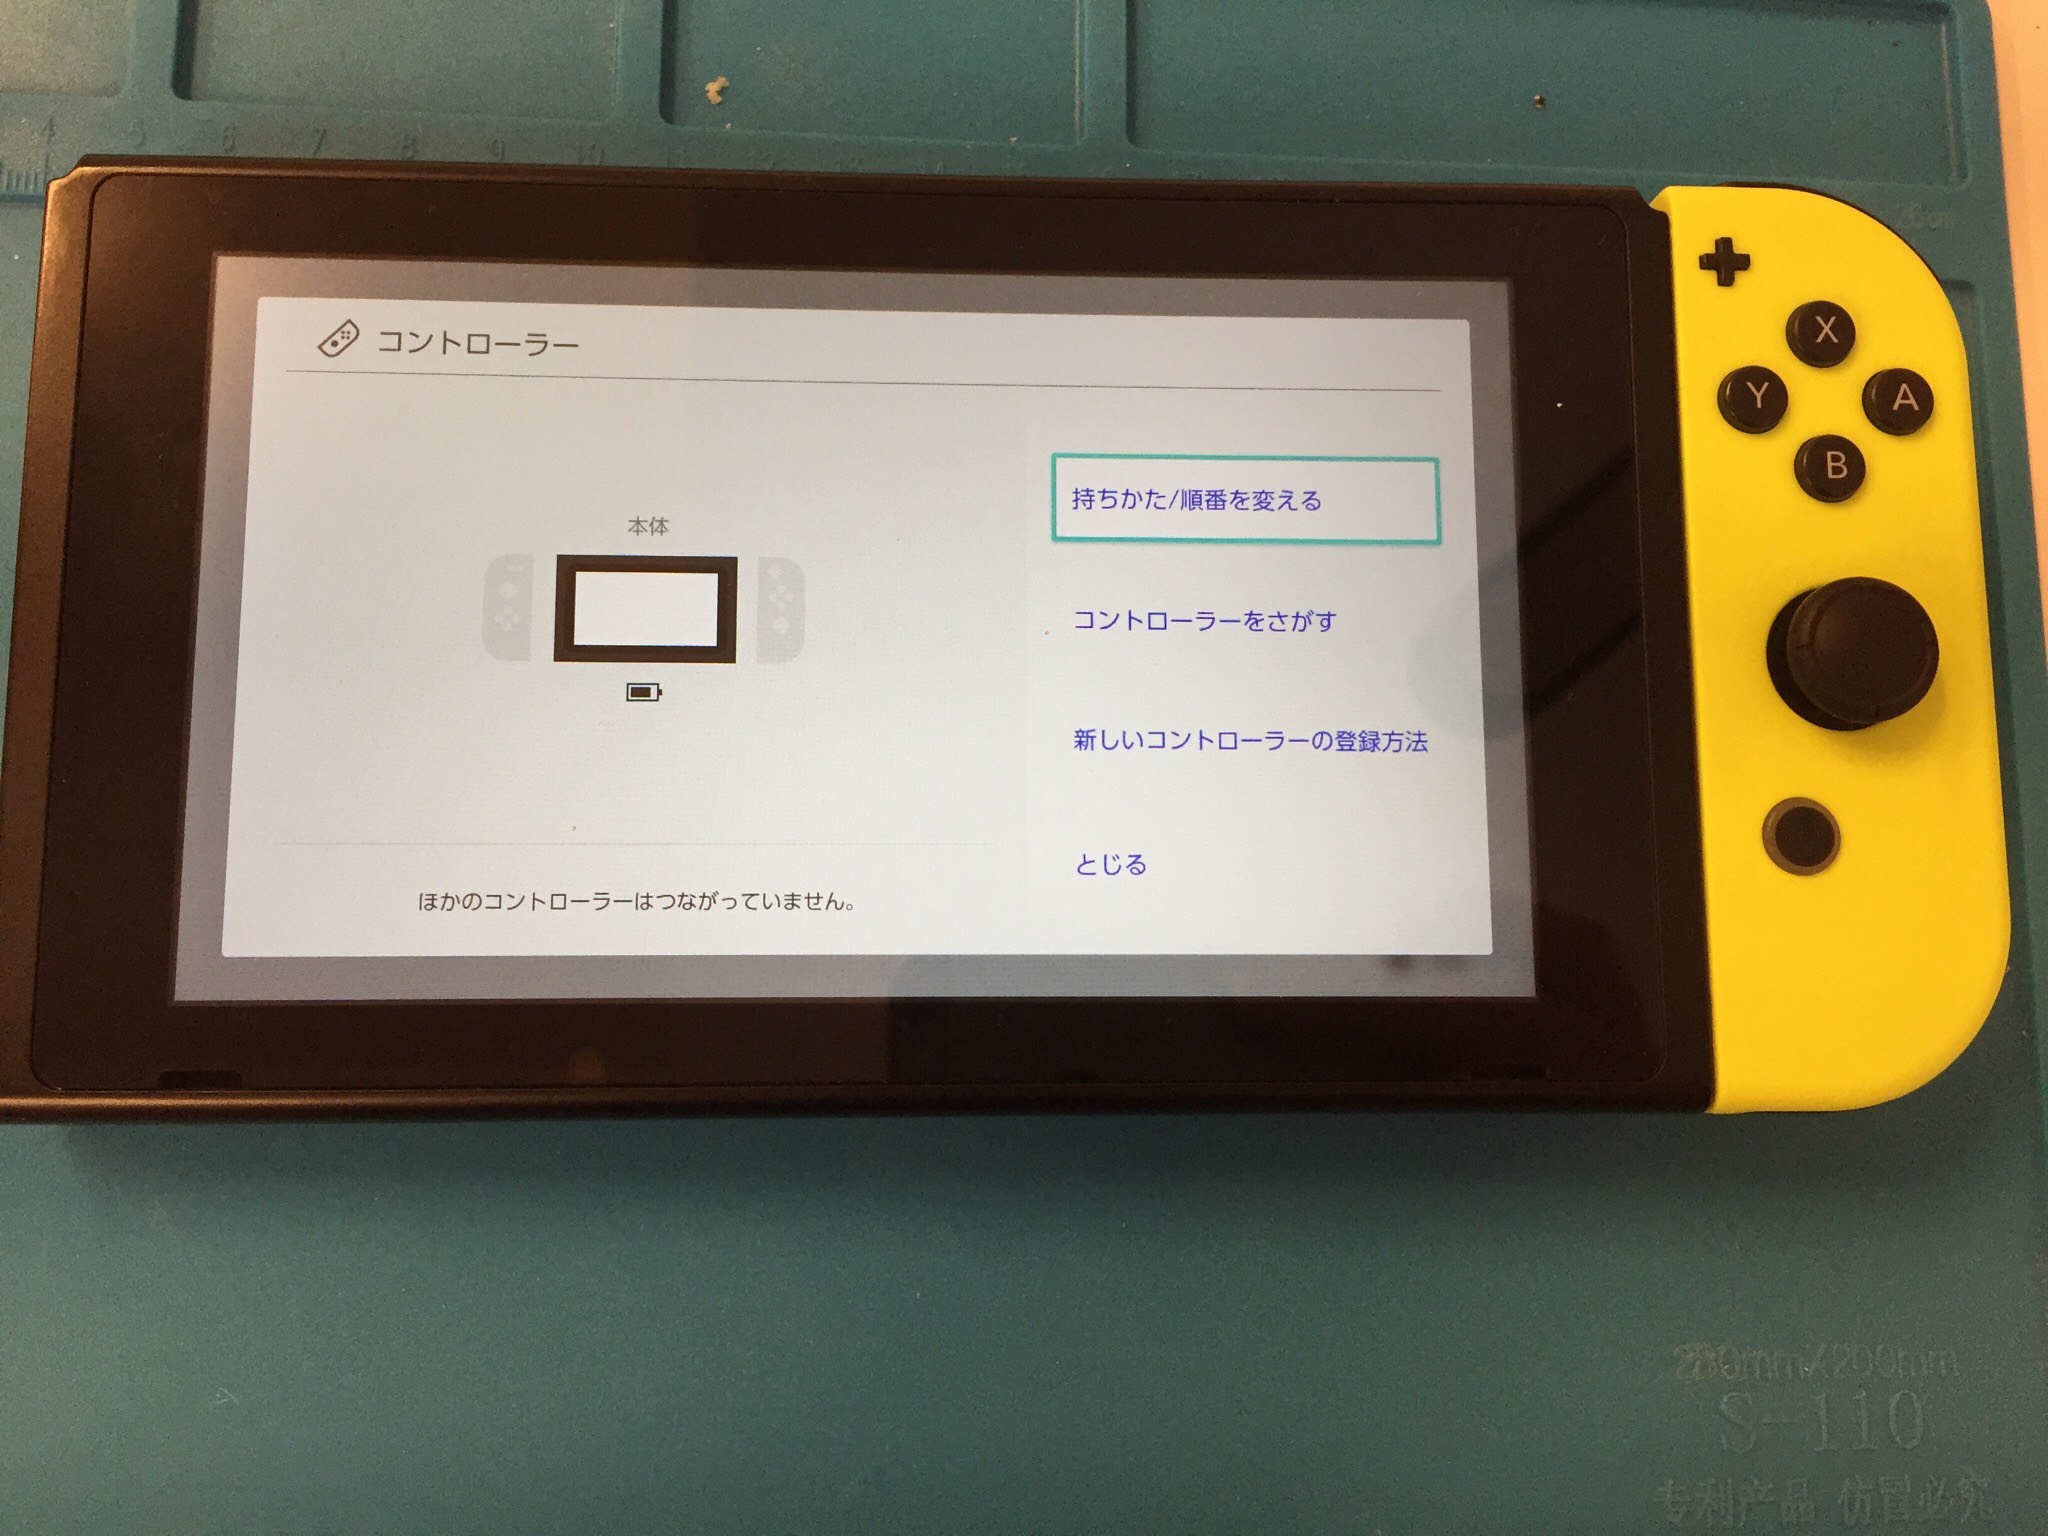 Nintendo Switch コントローラーを認識しない スライド部分も交換行ってます Nintendo3ds Switch Psp 修理のゲームホスピタル Nintendo3ds ニンテンドーds Psp 修理